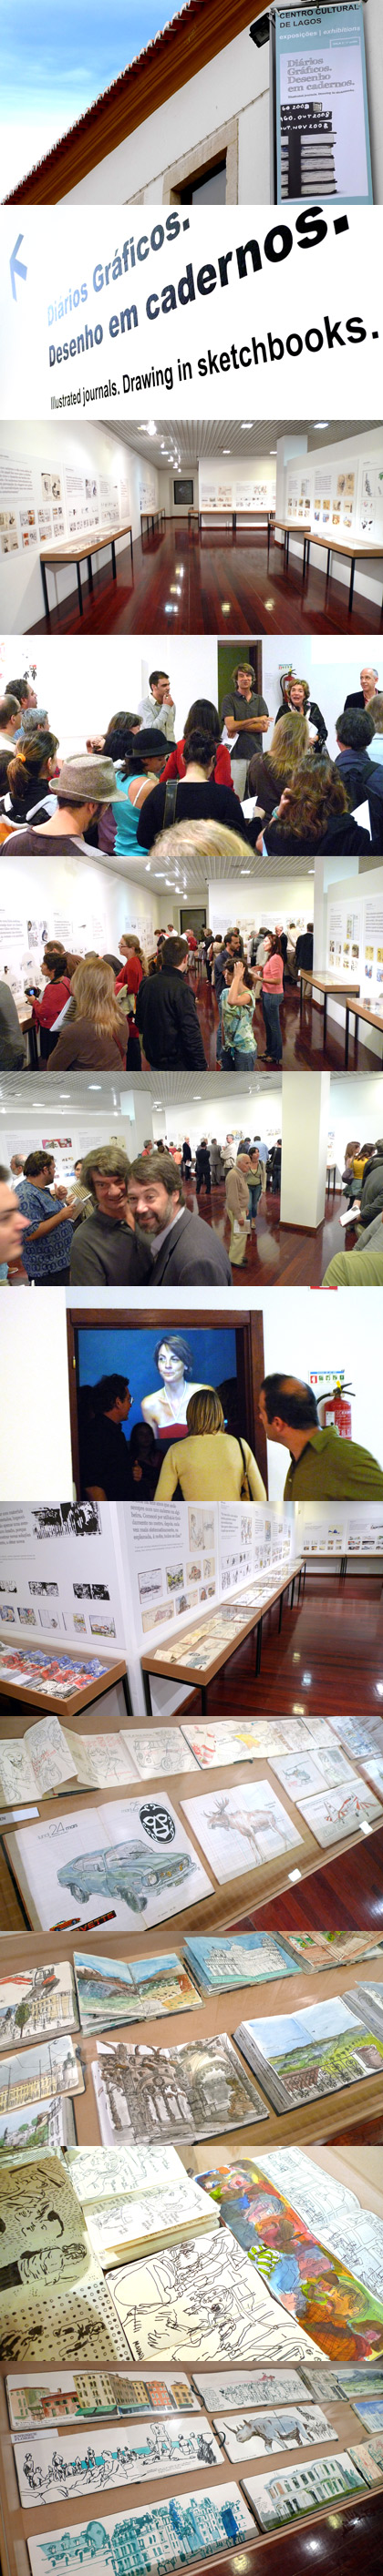 exhibition in lagos - portugal